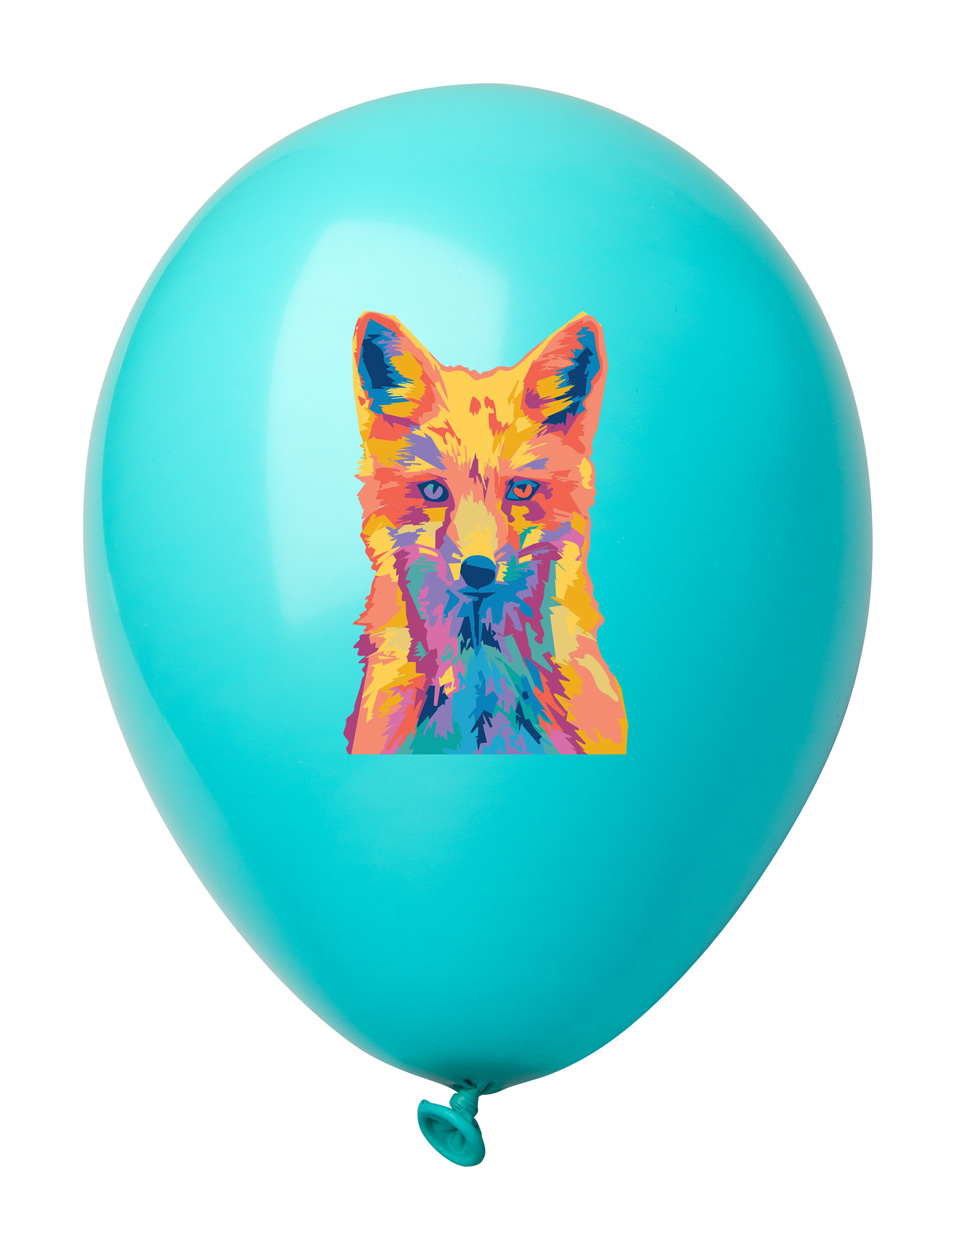 Promo  CreaBalloon set za napuhavanje balona, pastelnih boja